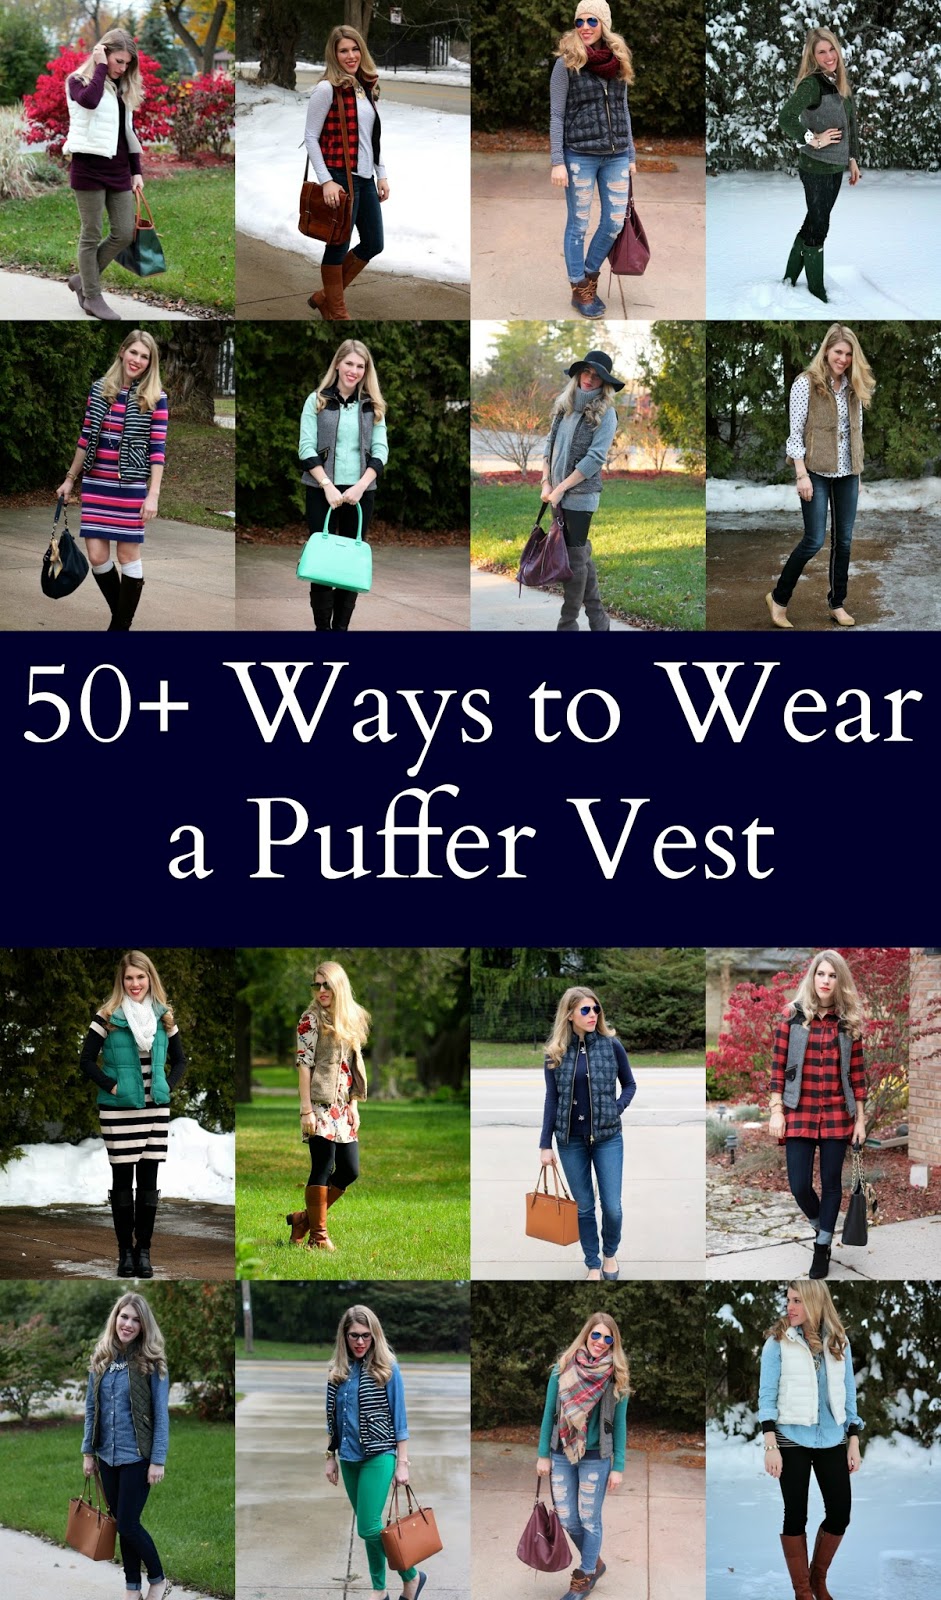 50+ Ways to Wear a Puffer Vest